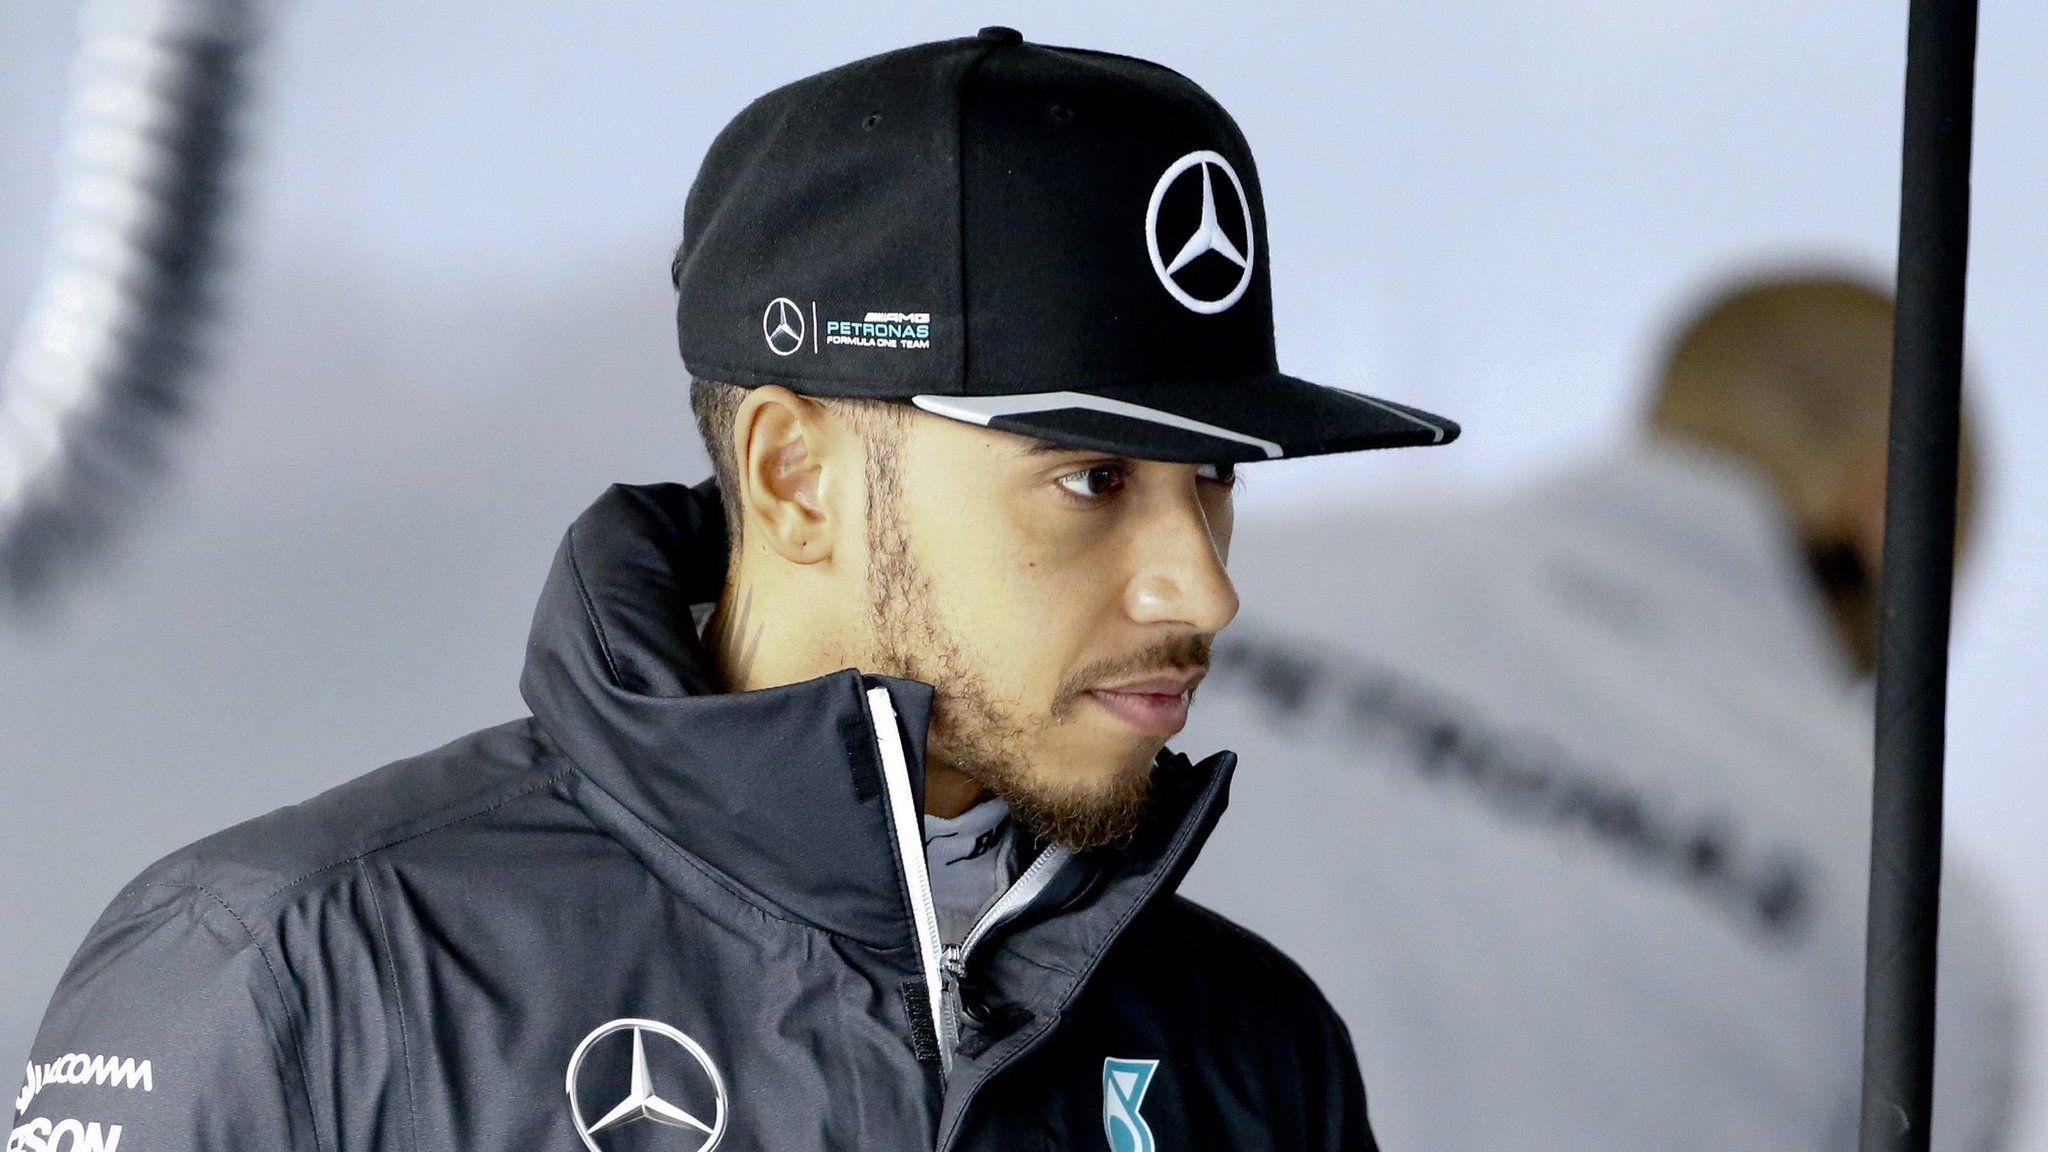 Lewis Hamilton looking pensive